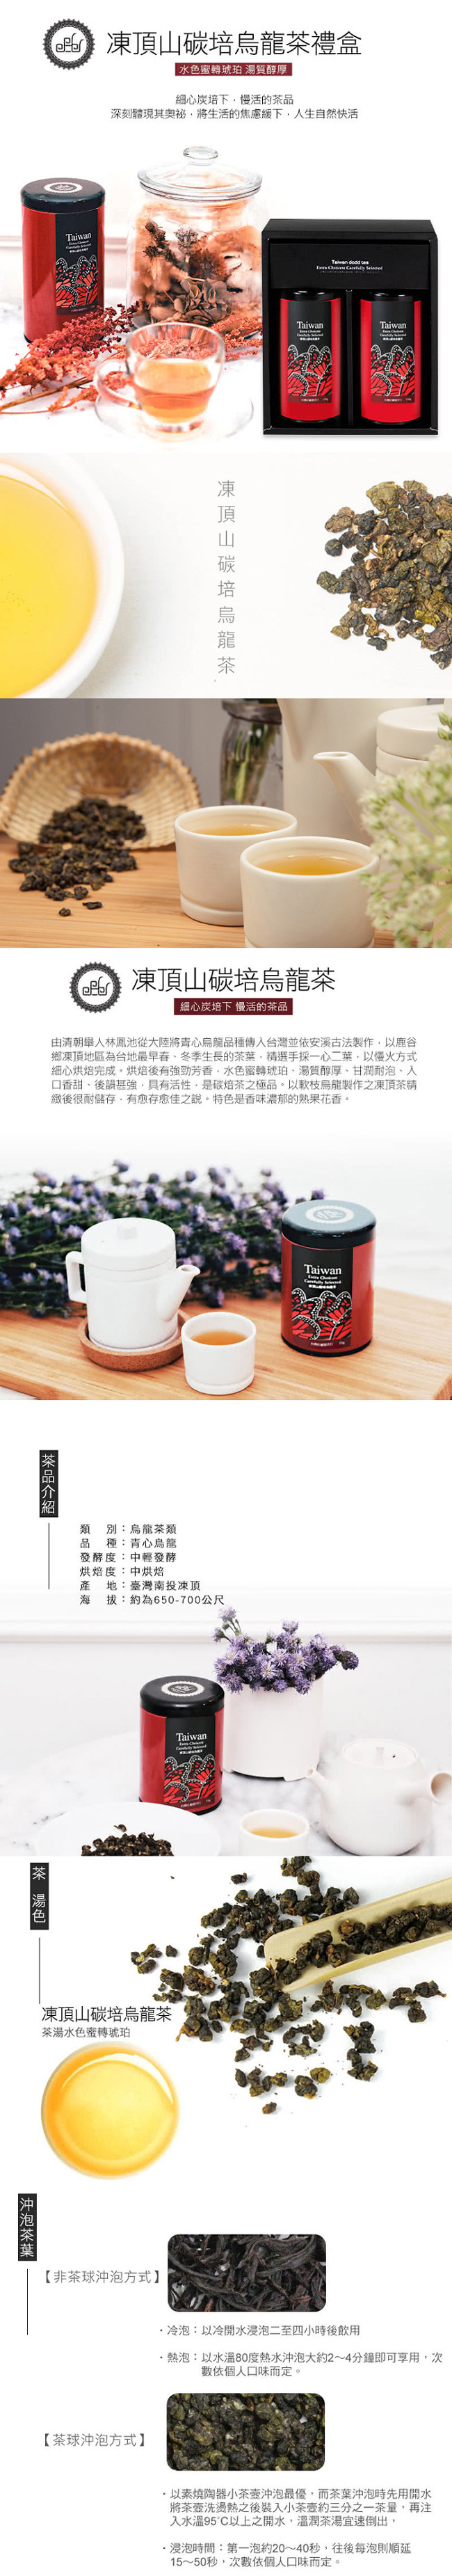 【DODD Tea杜爾德】精選『凍頂山碳培』烏龍茶禮盒組(150gx2)